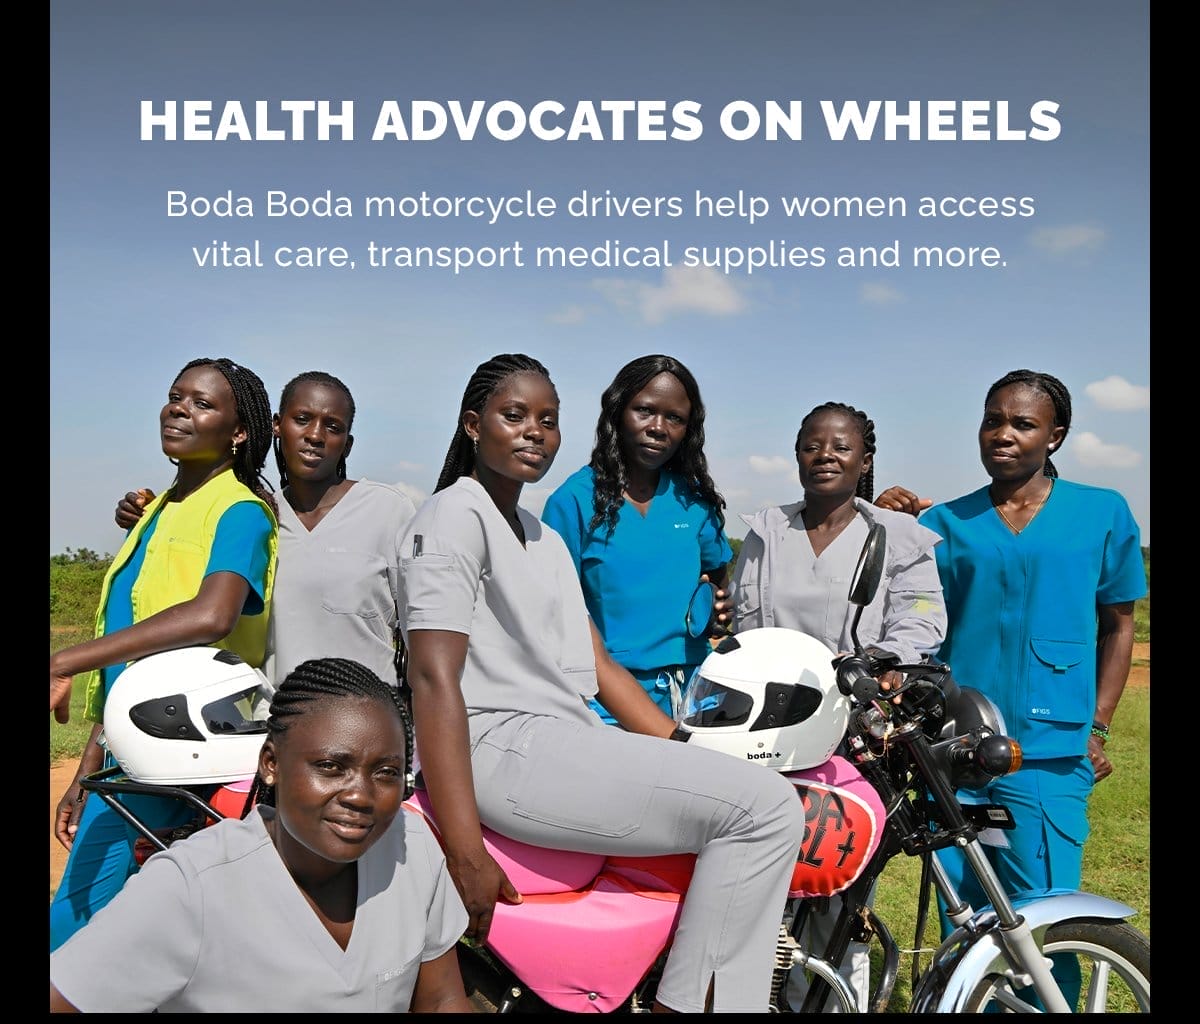 Health advocates on wheels